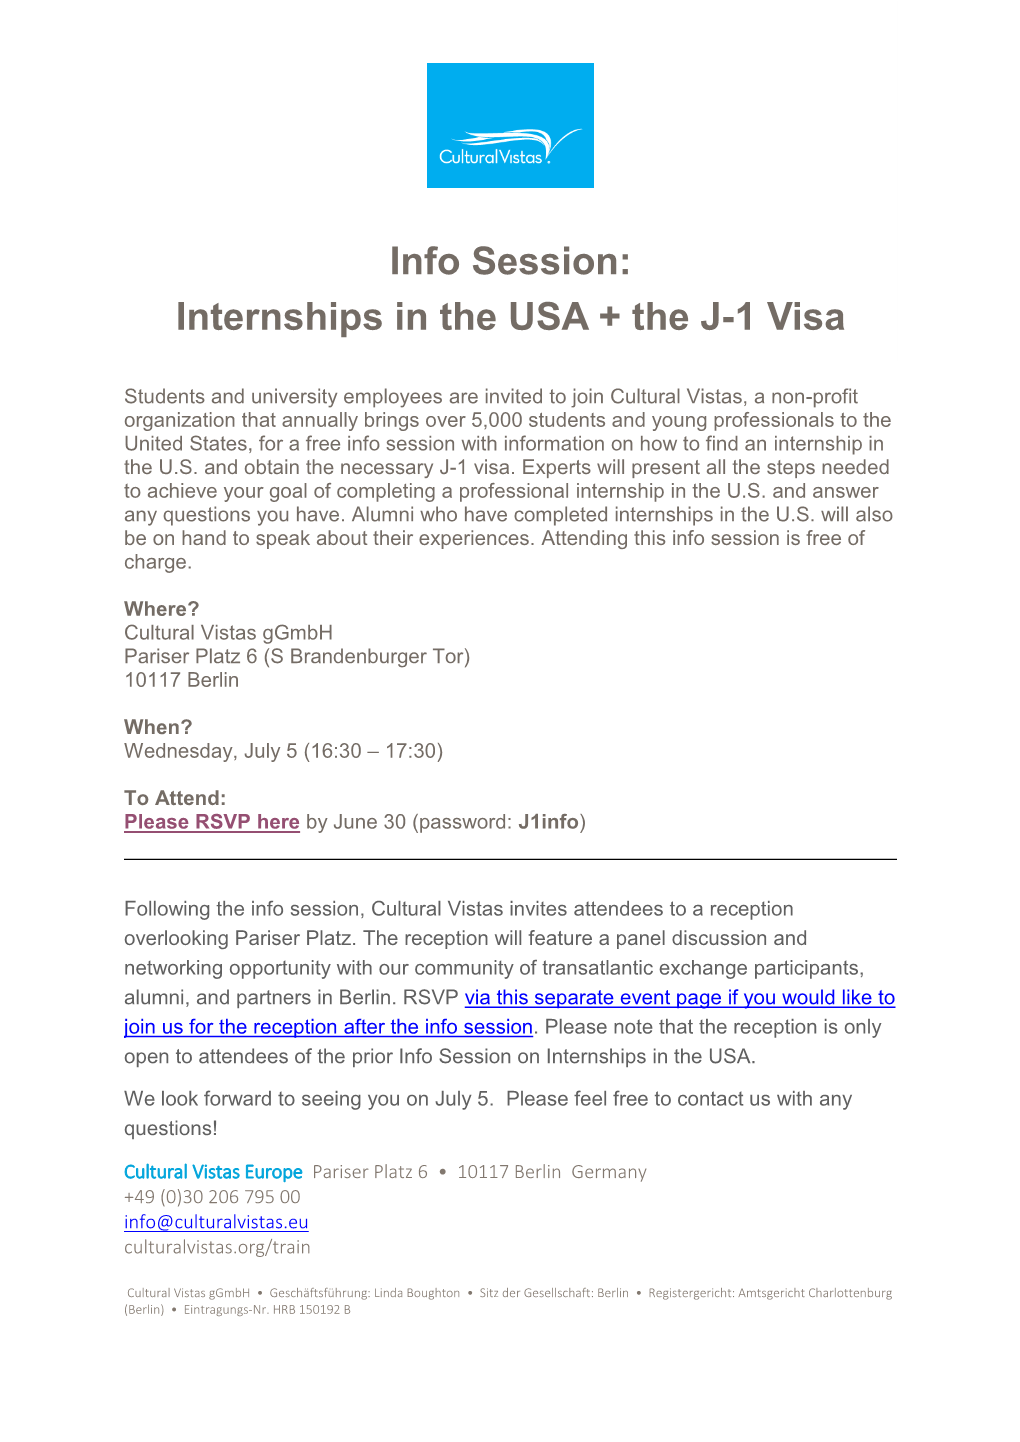 Info Session: Internships in the USA + the J-1 Visa